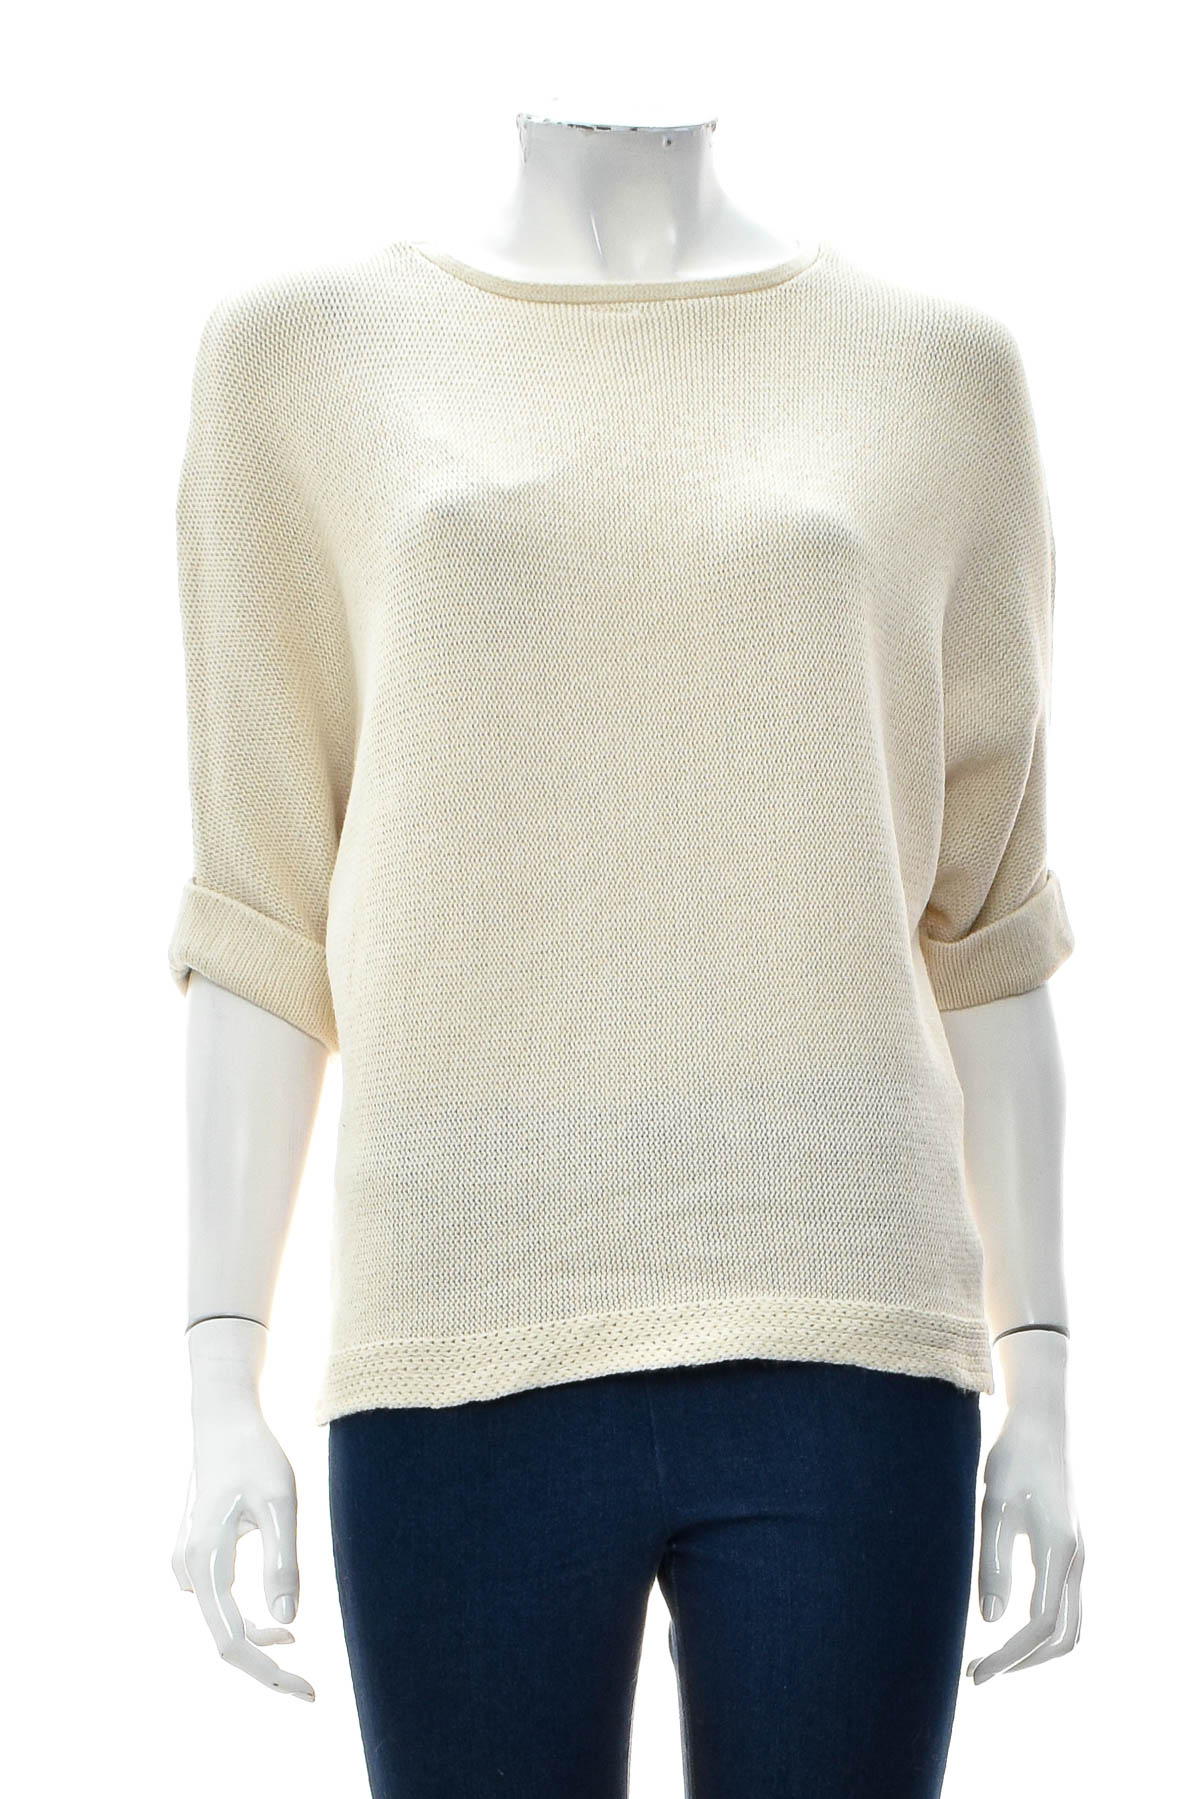 Women's sweater - Anko - 0